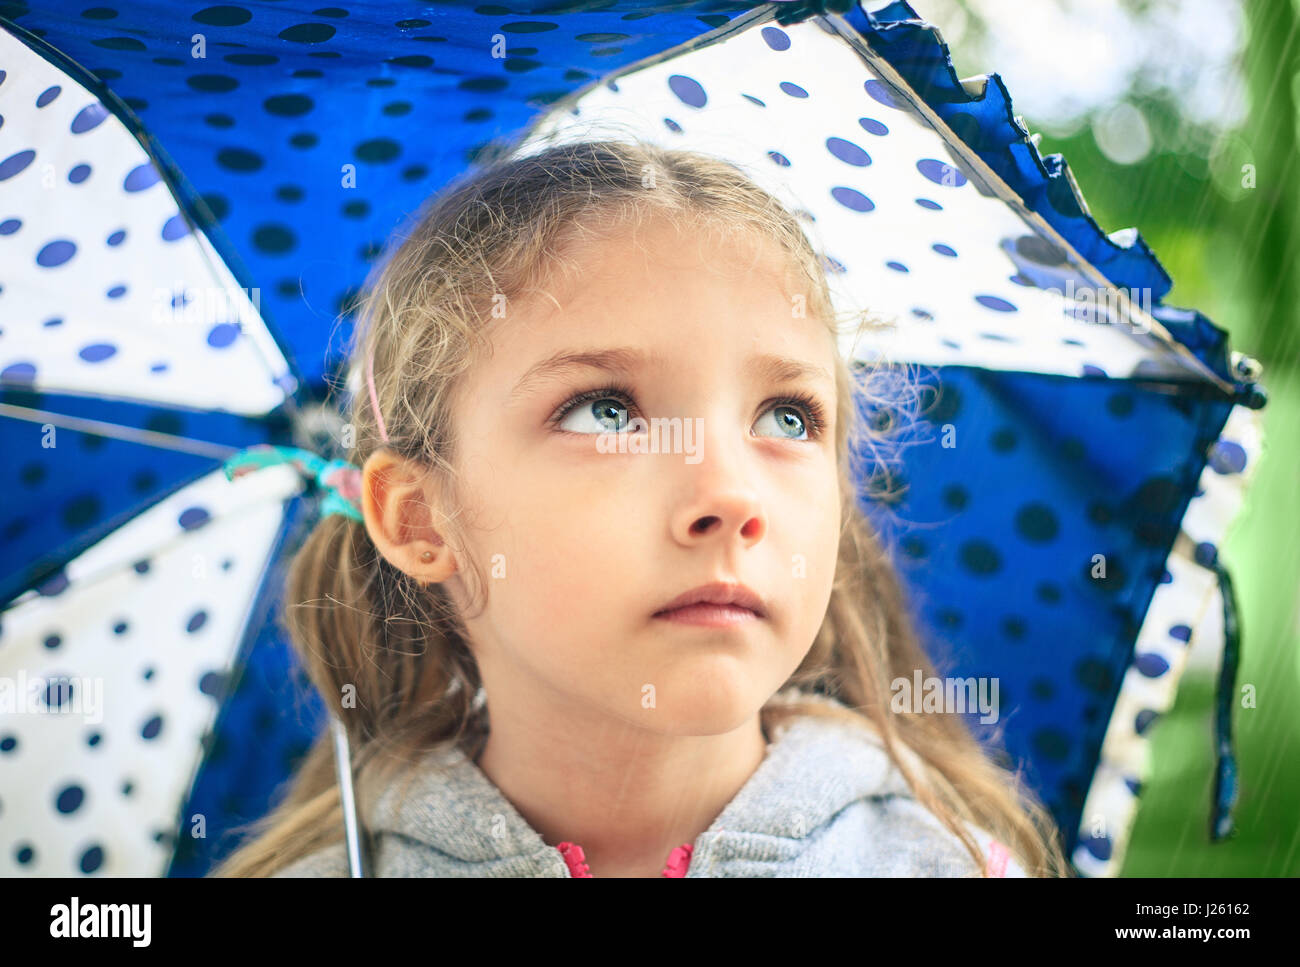 Portrait Of A Cute Sad Girl With An Umbrella In The Rain